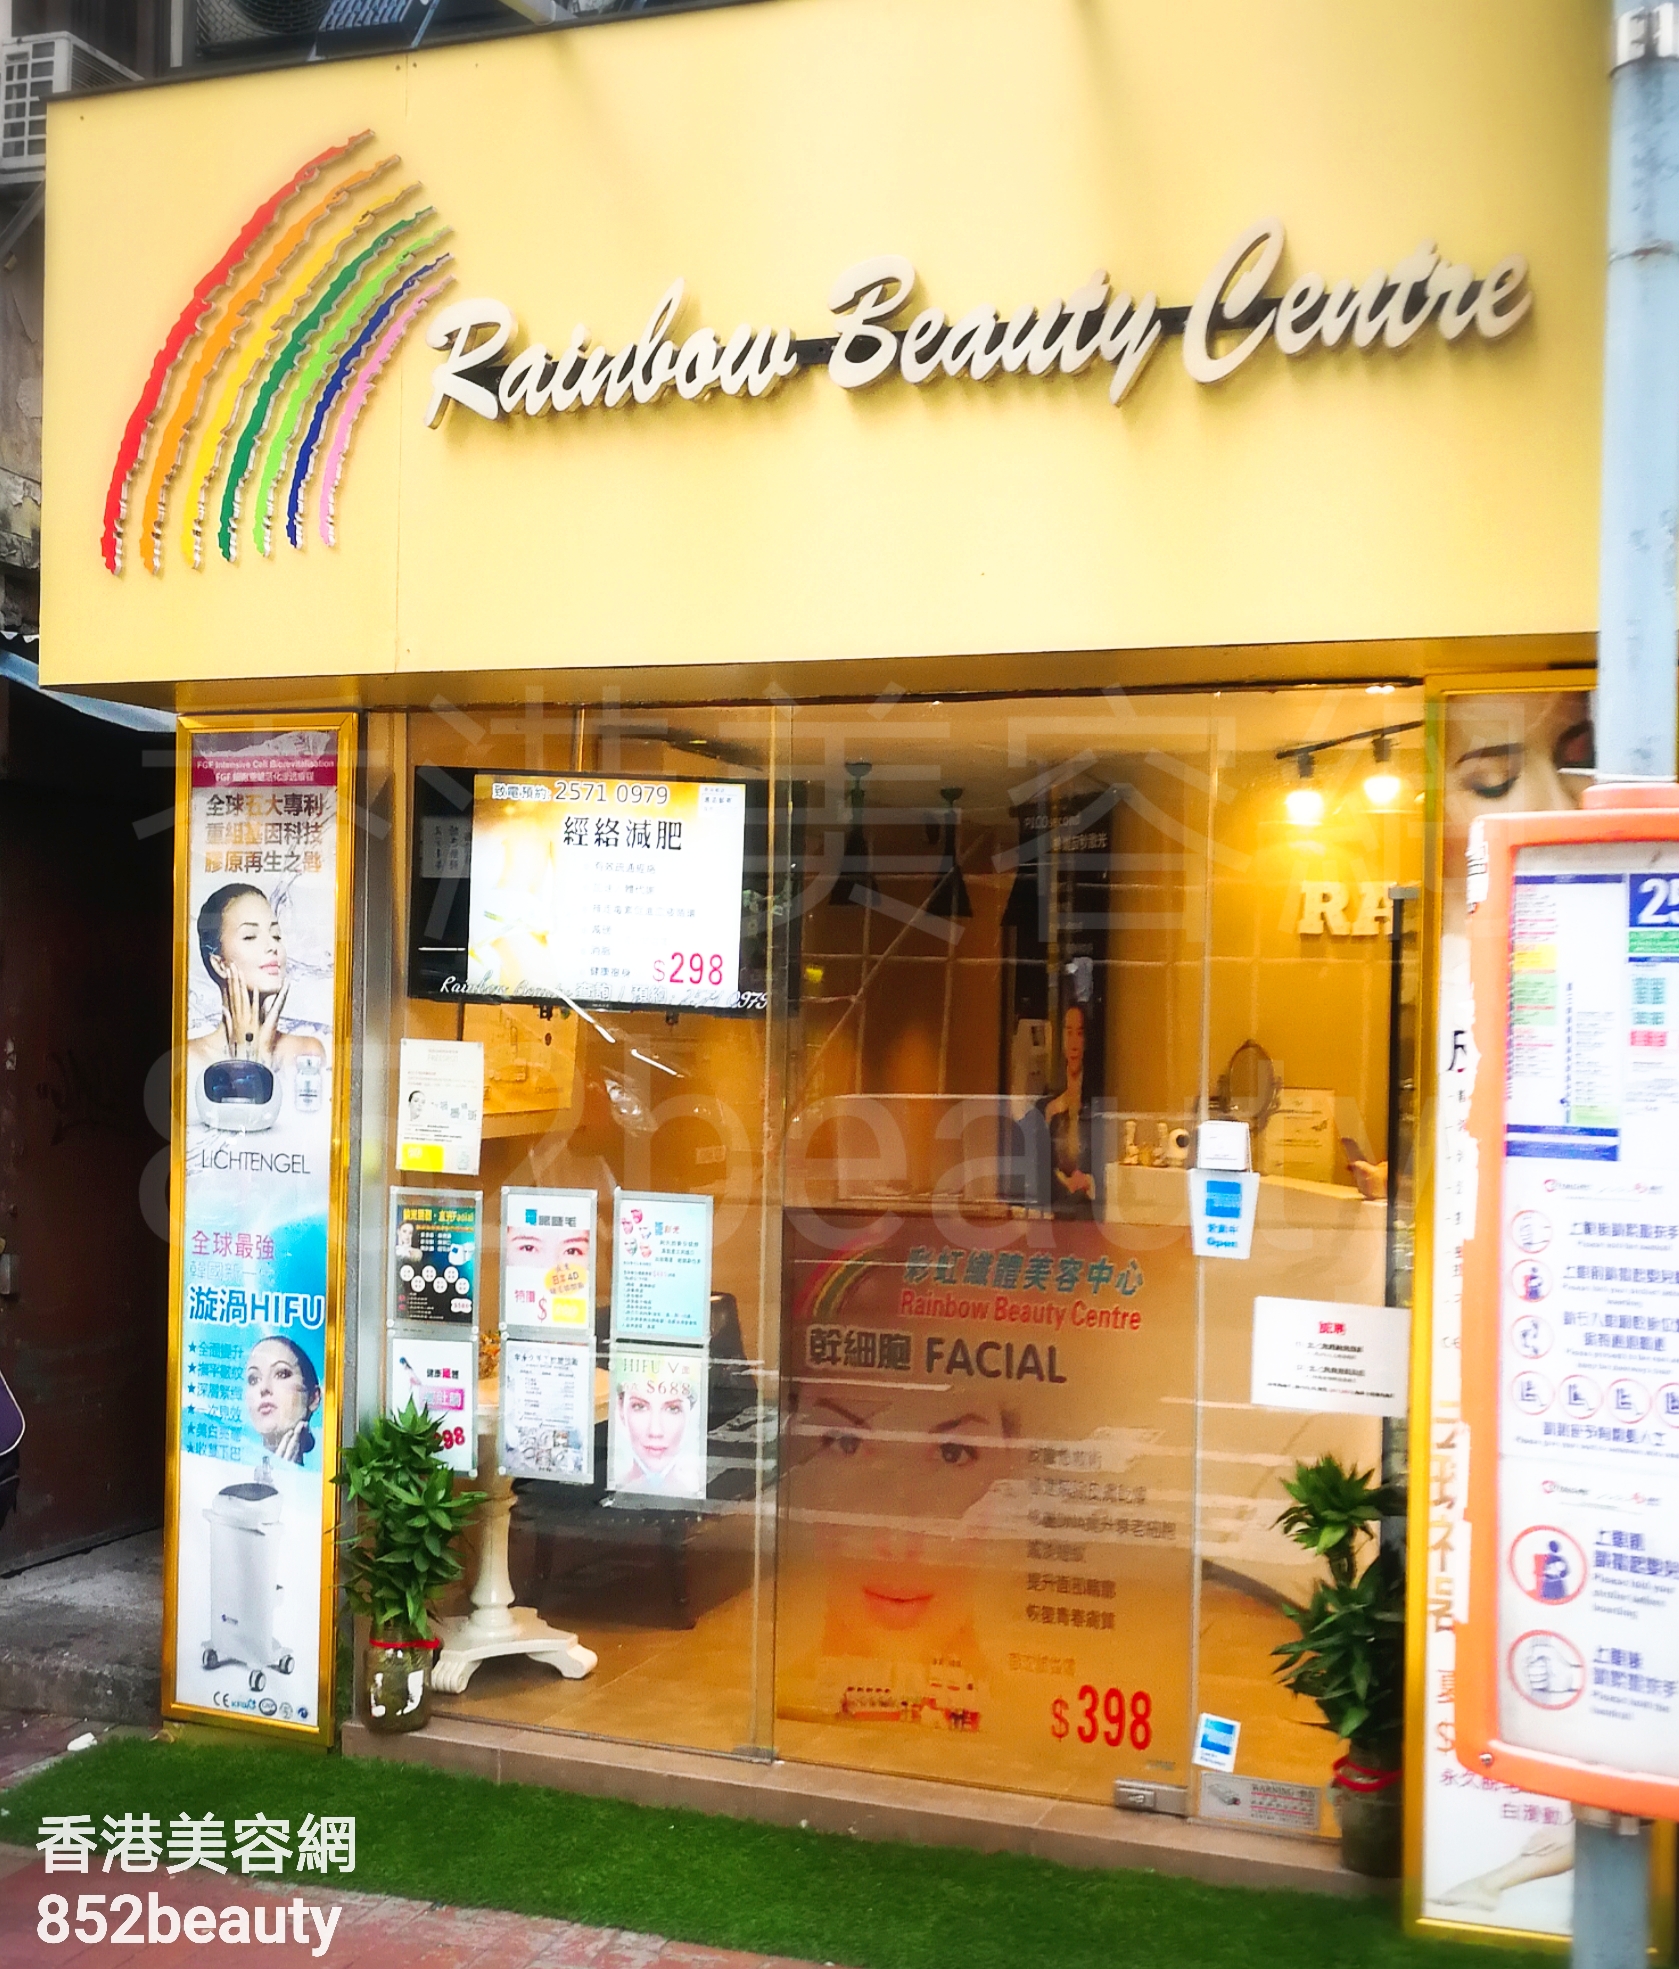 眼部护理: Rainbow Beauty Centre